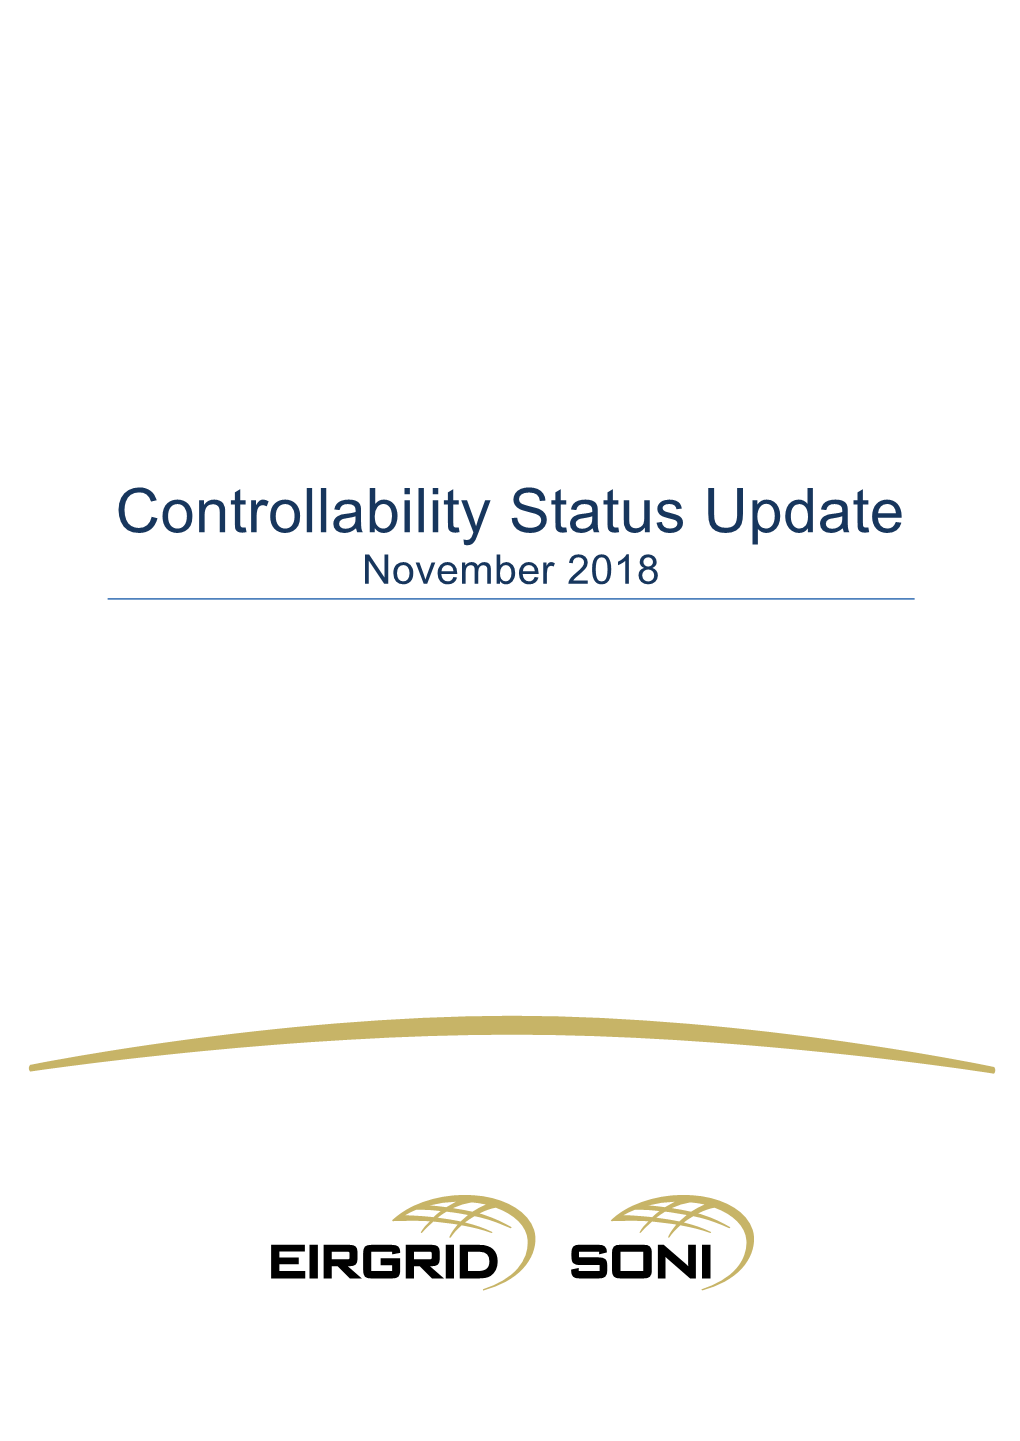 Controllability Status Update November 2018